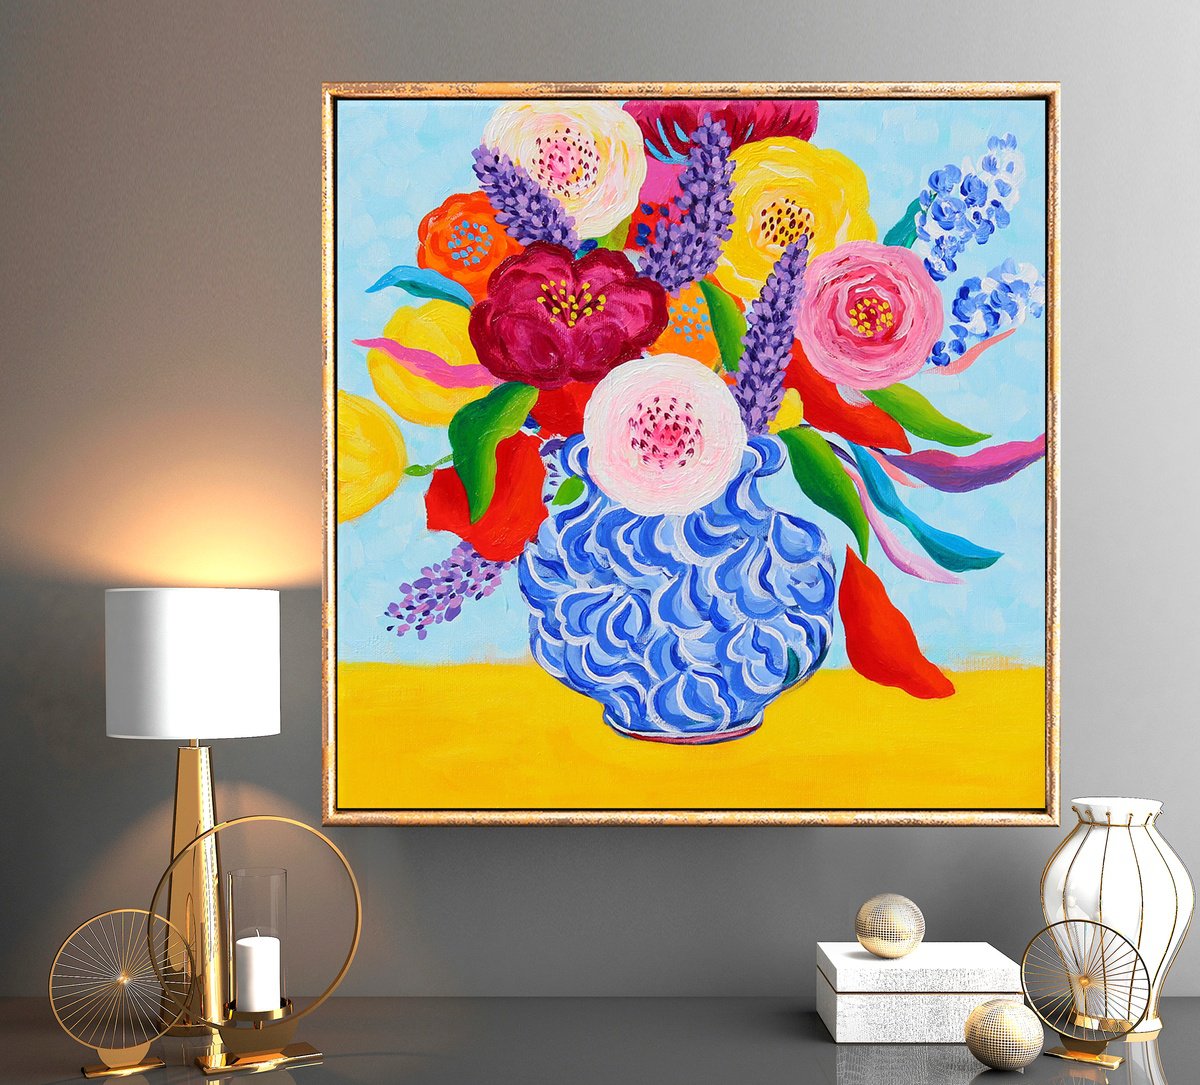 A Bouquet of Regeneration Colors by Martina Boycheva